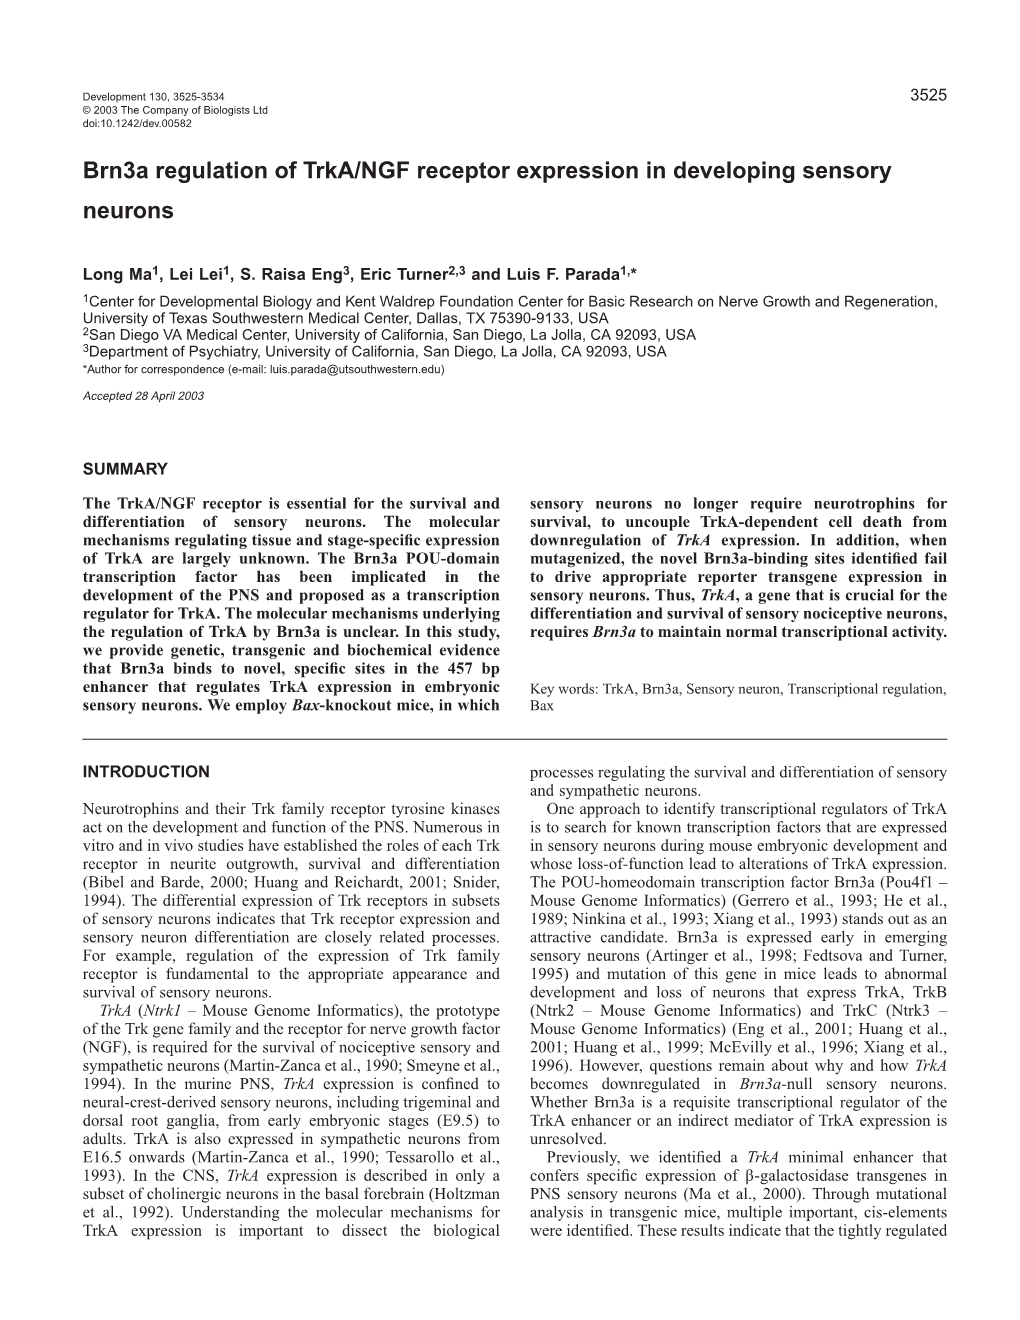 Brn3a Regulation of Trka/NGF Receptor Expression in Developing Sensory Neurons